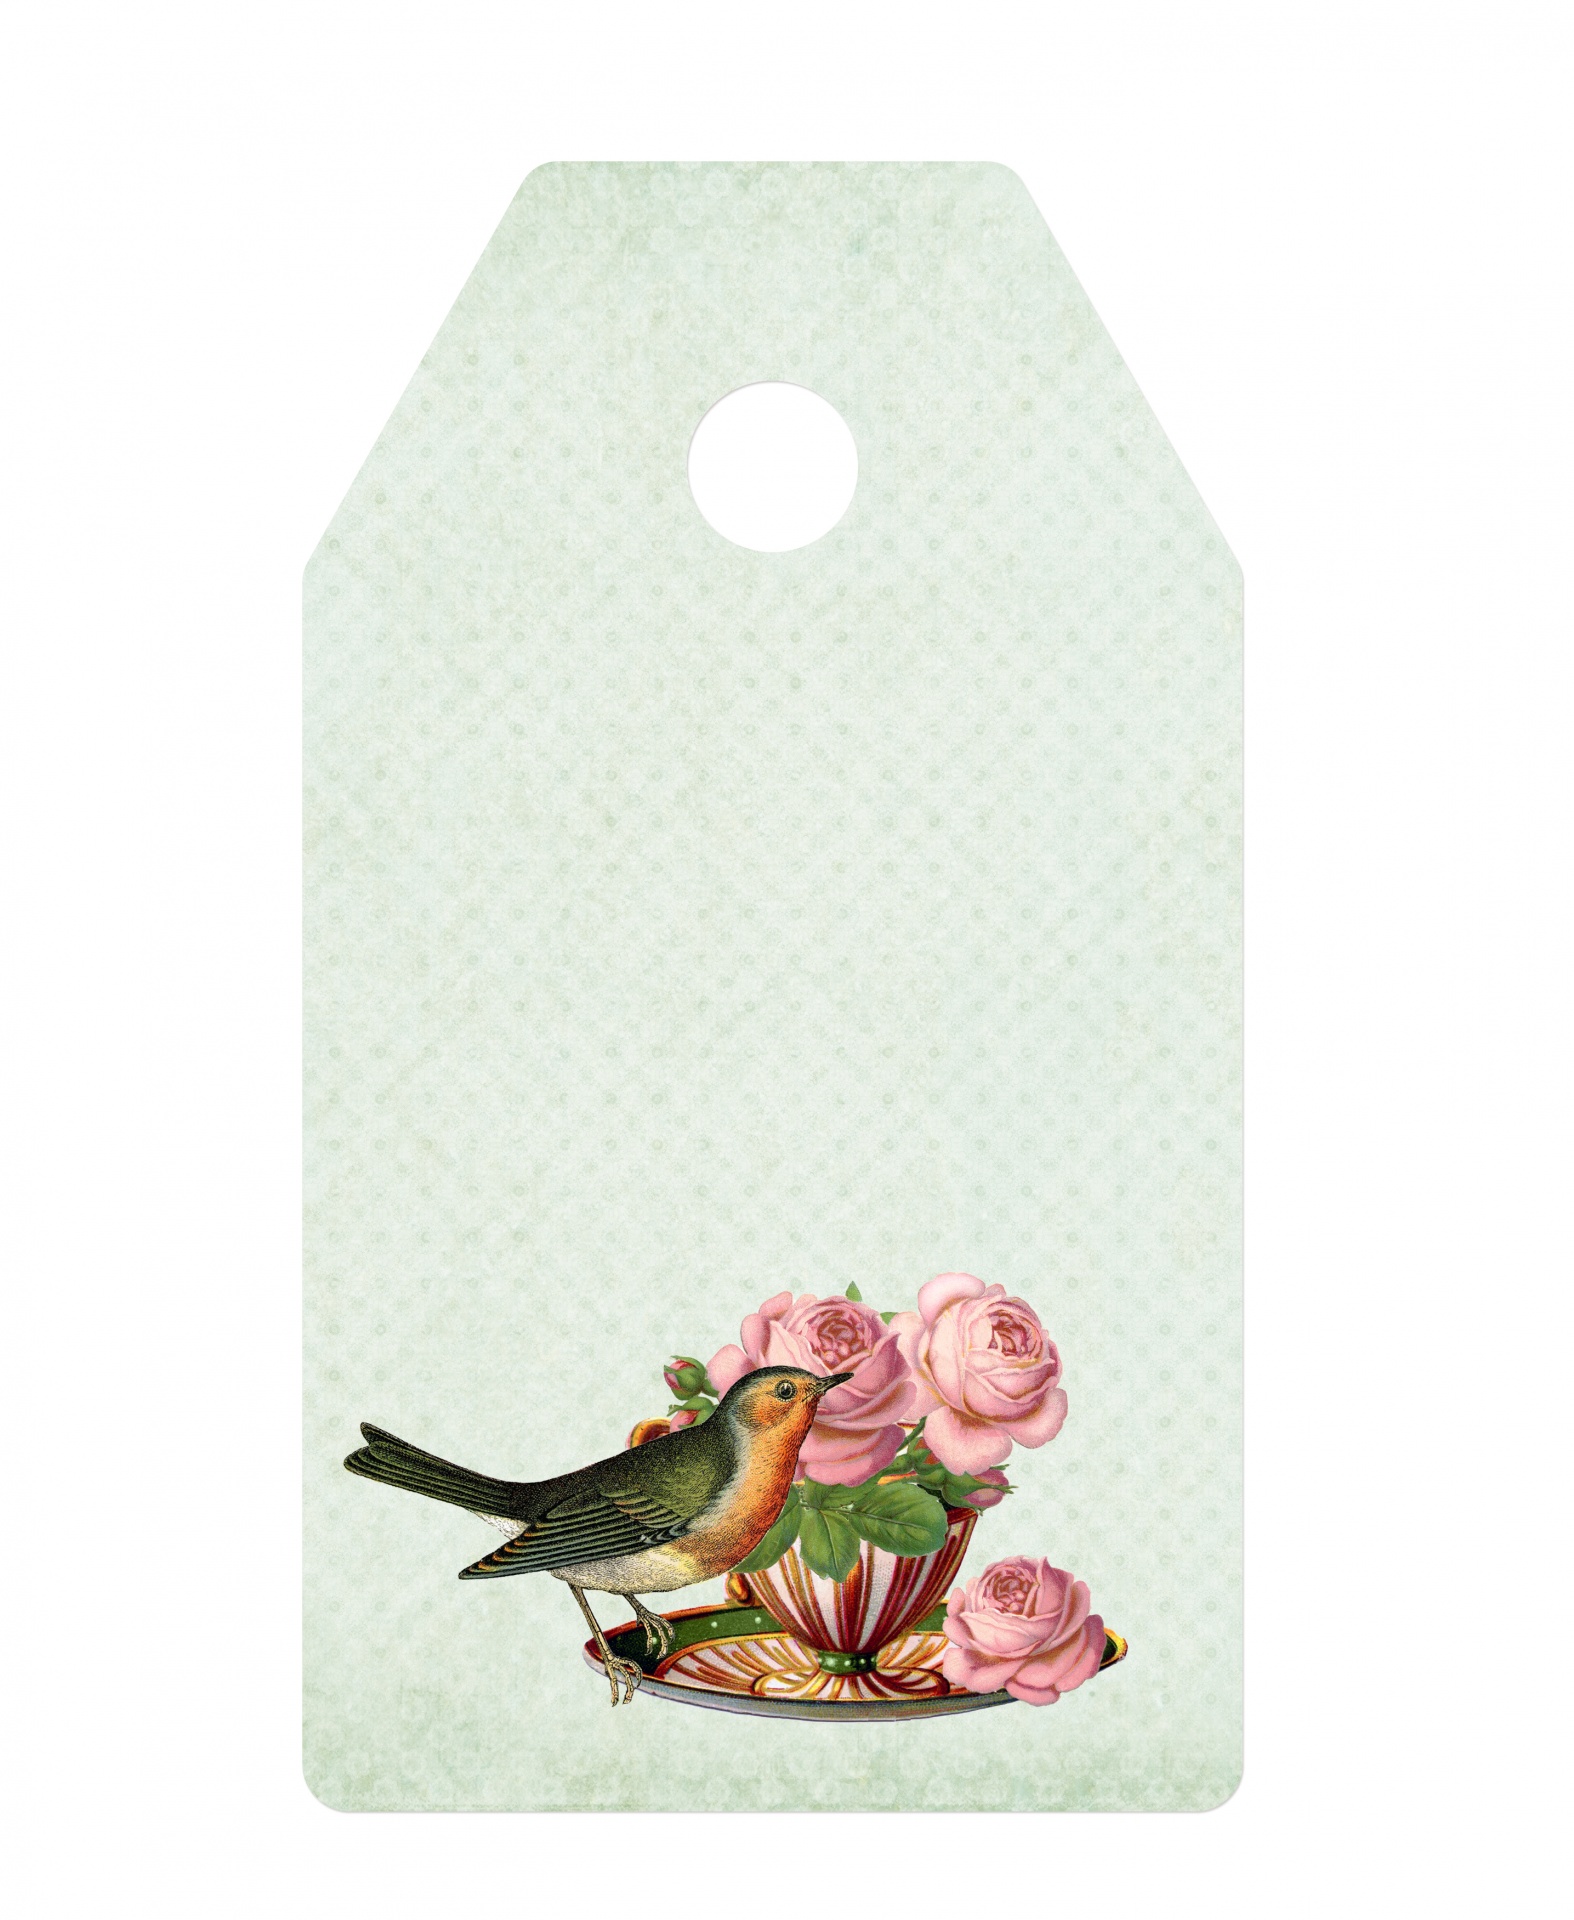 Teacup, Flowers, Bird Vintage